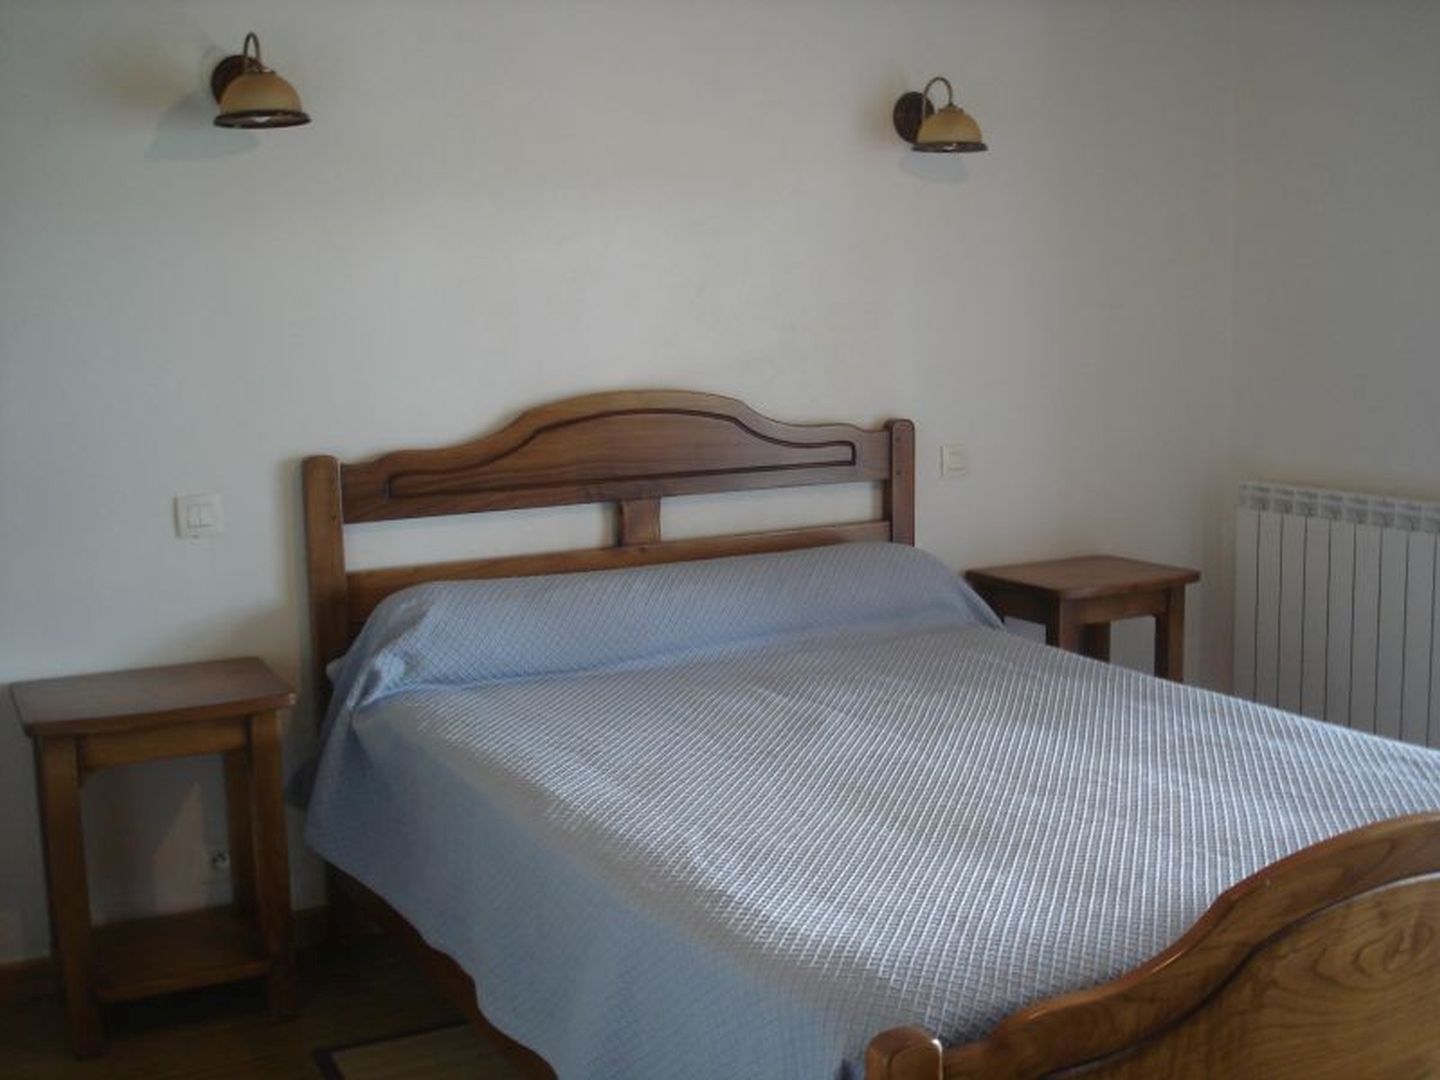 Location erramoun - Ametzaldia RDC - Deuxième chambre lit double - Irouléguy 